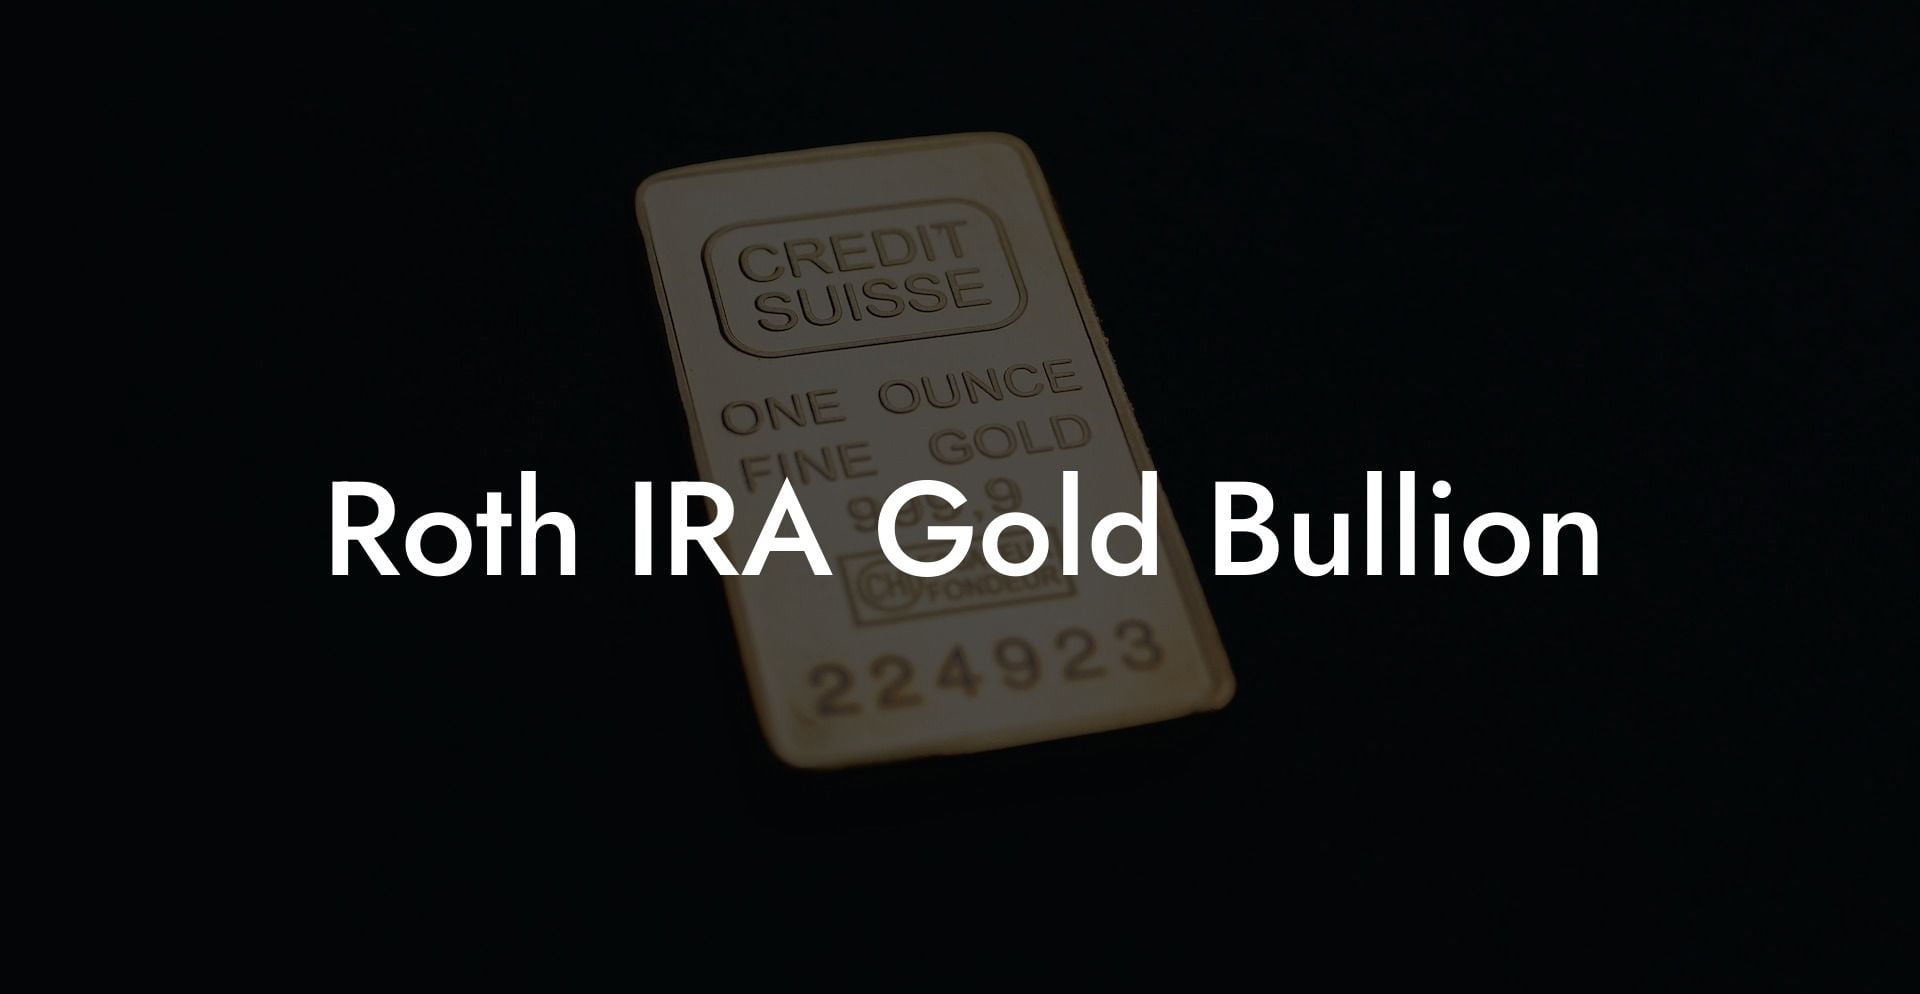 Roth IRA Gold Bullion